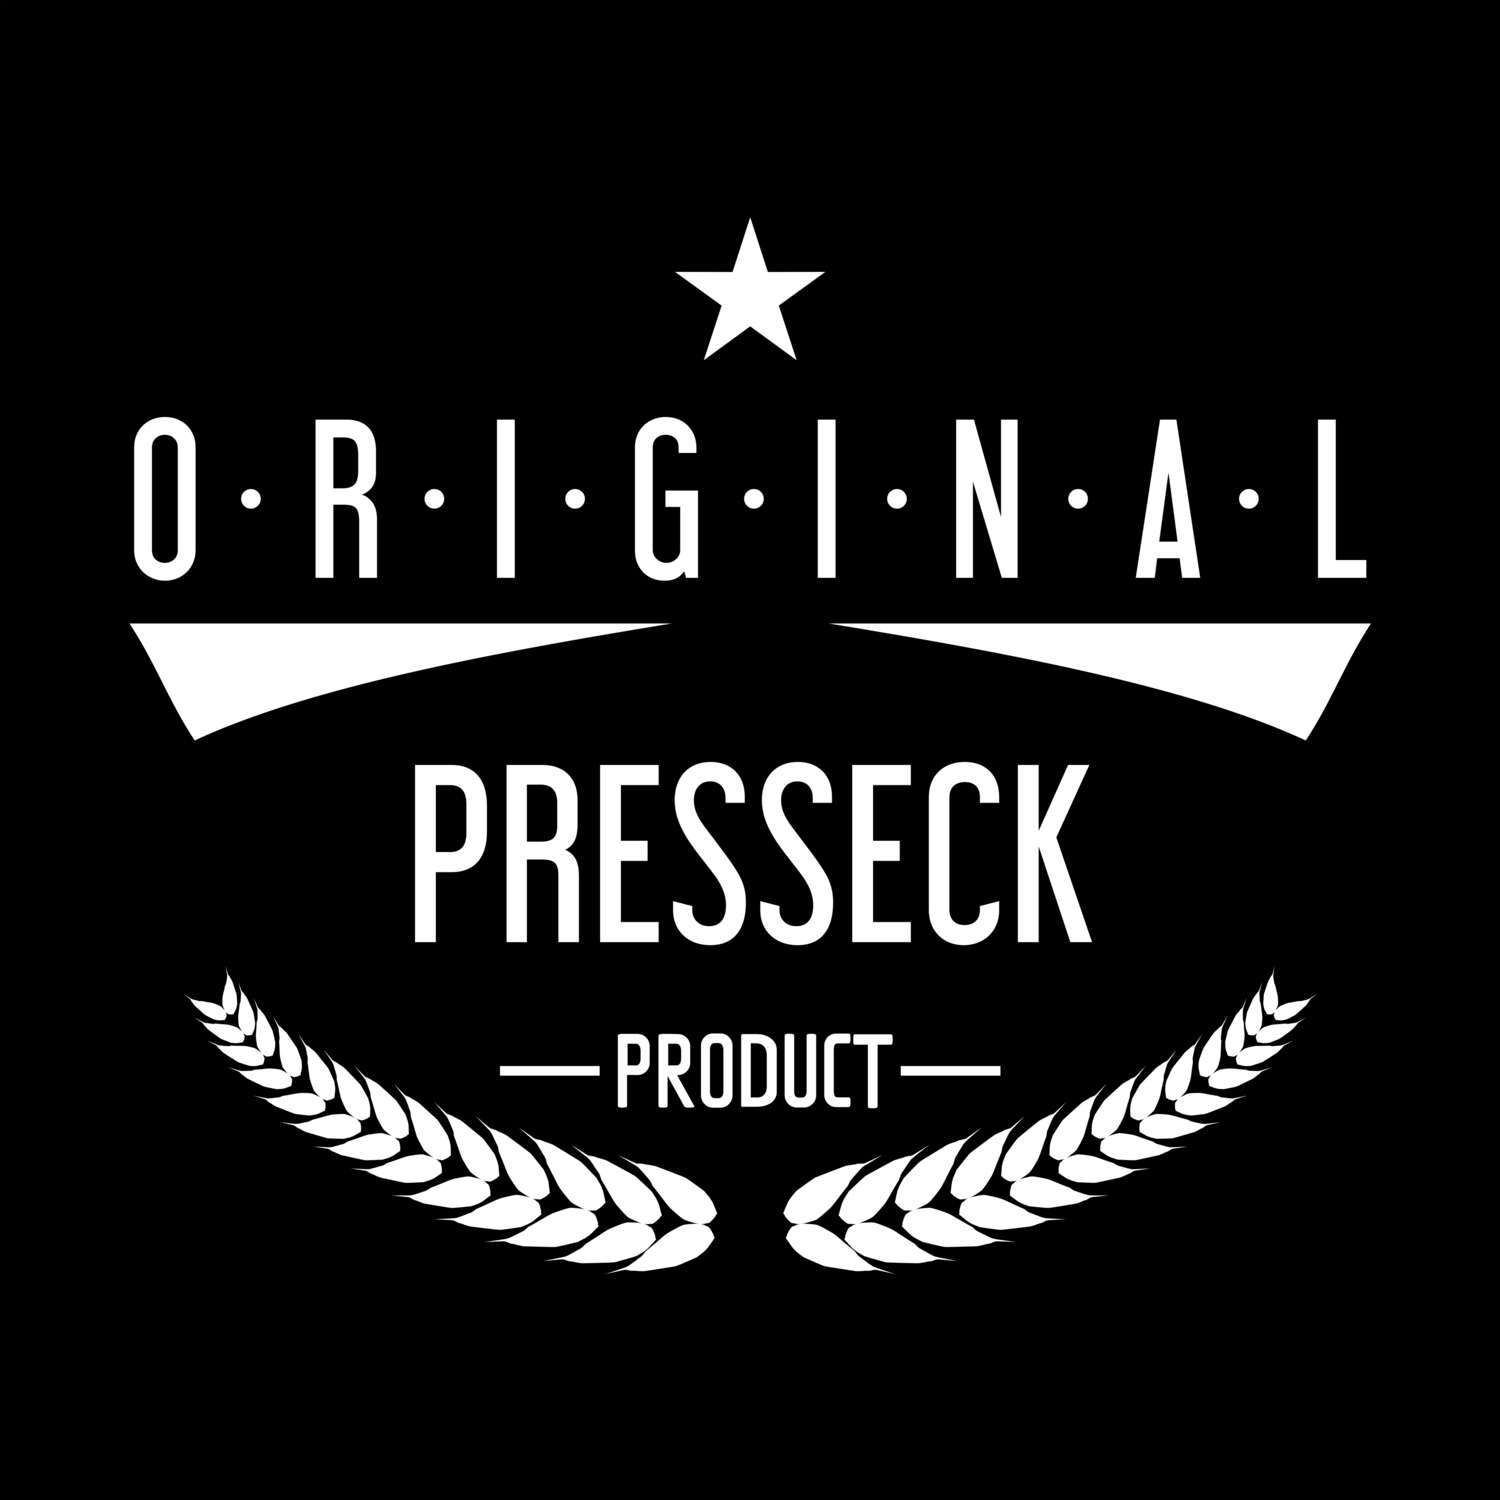 Presseck T-Shirt »Original Product«